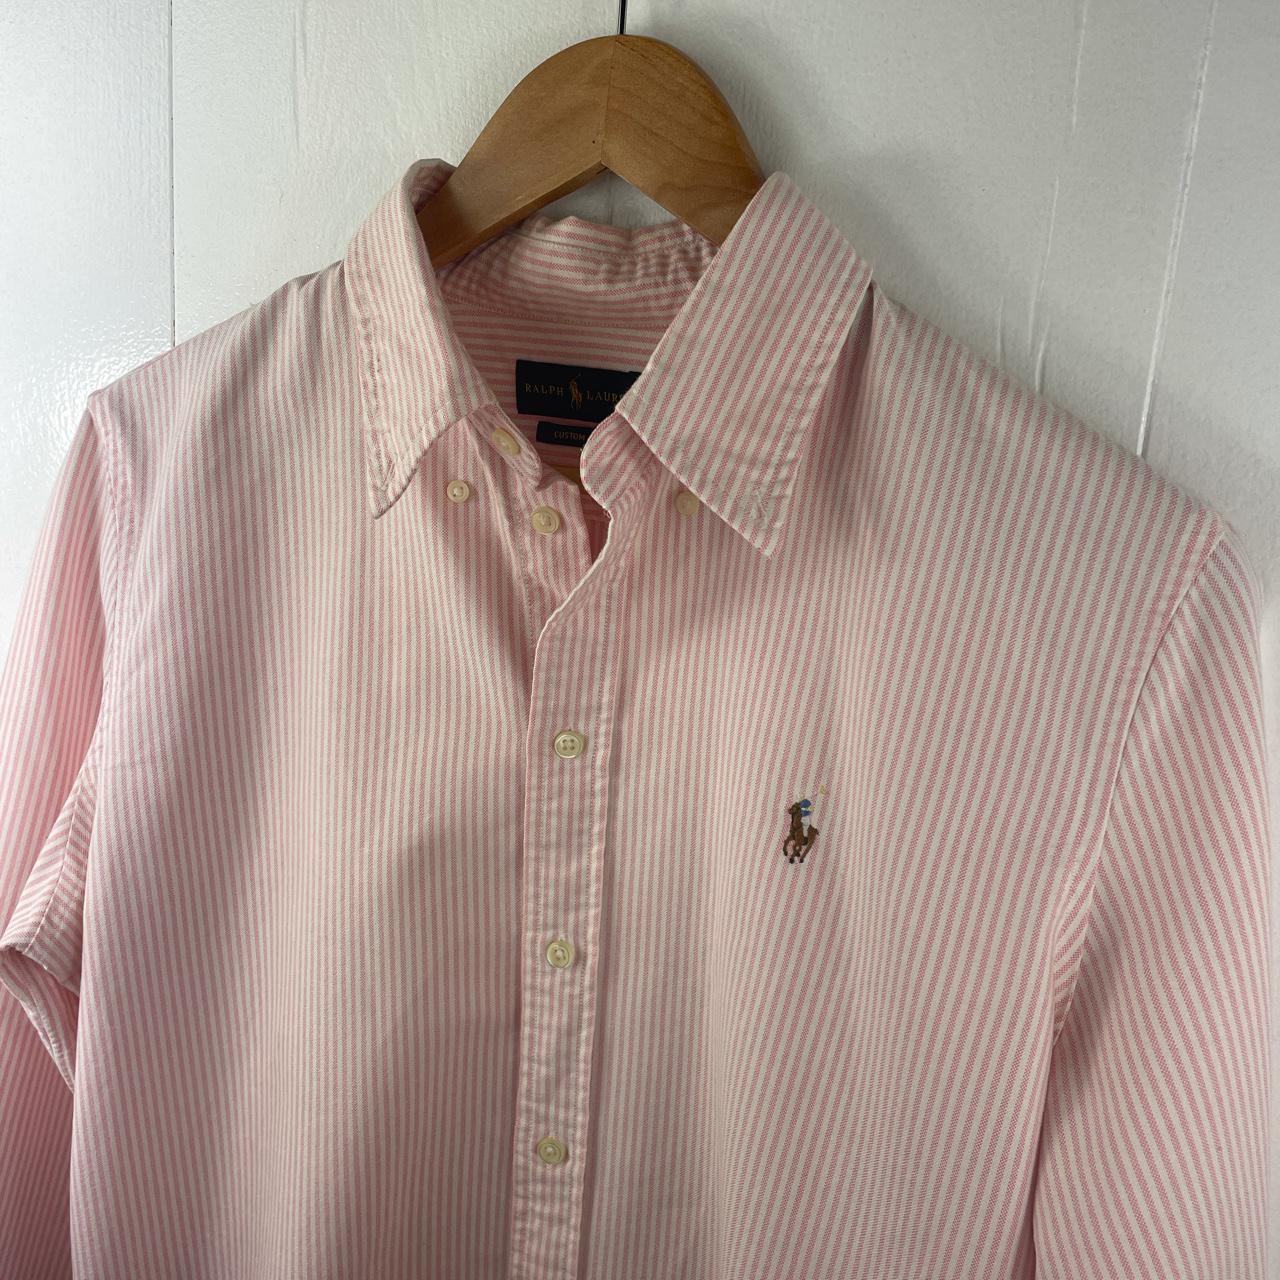 Ralph Lauren pinstripe formal shirt in pink and... - Depop